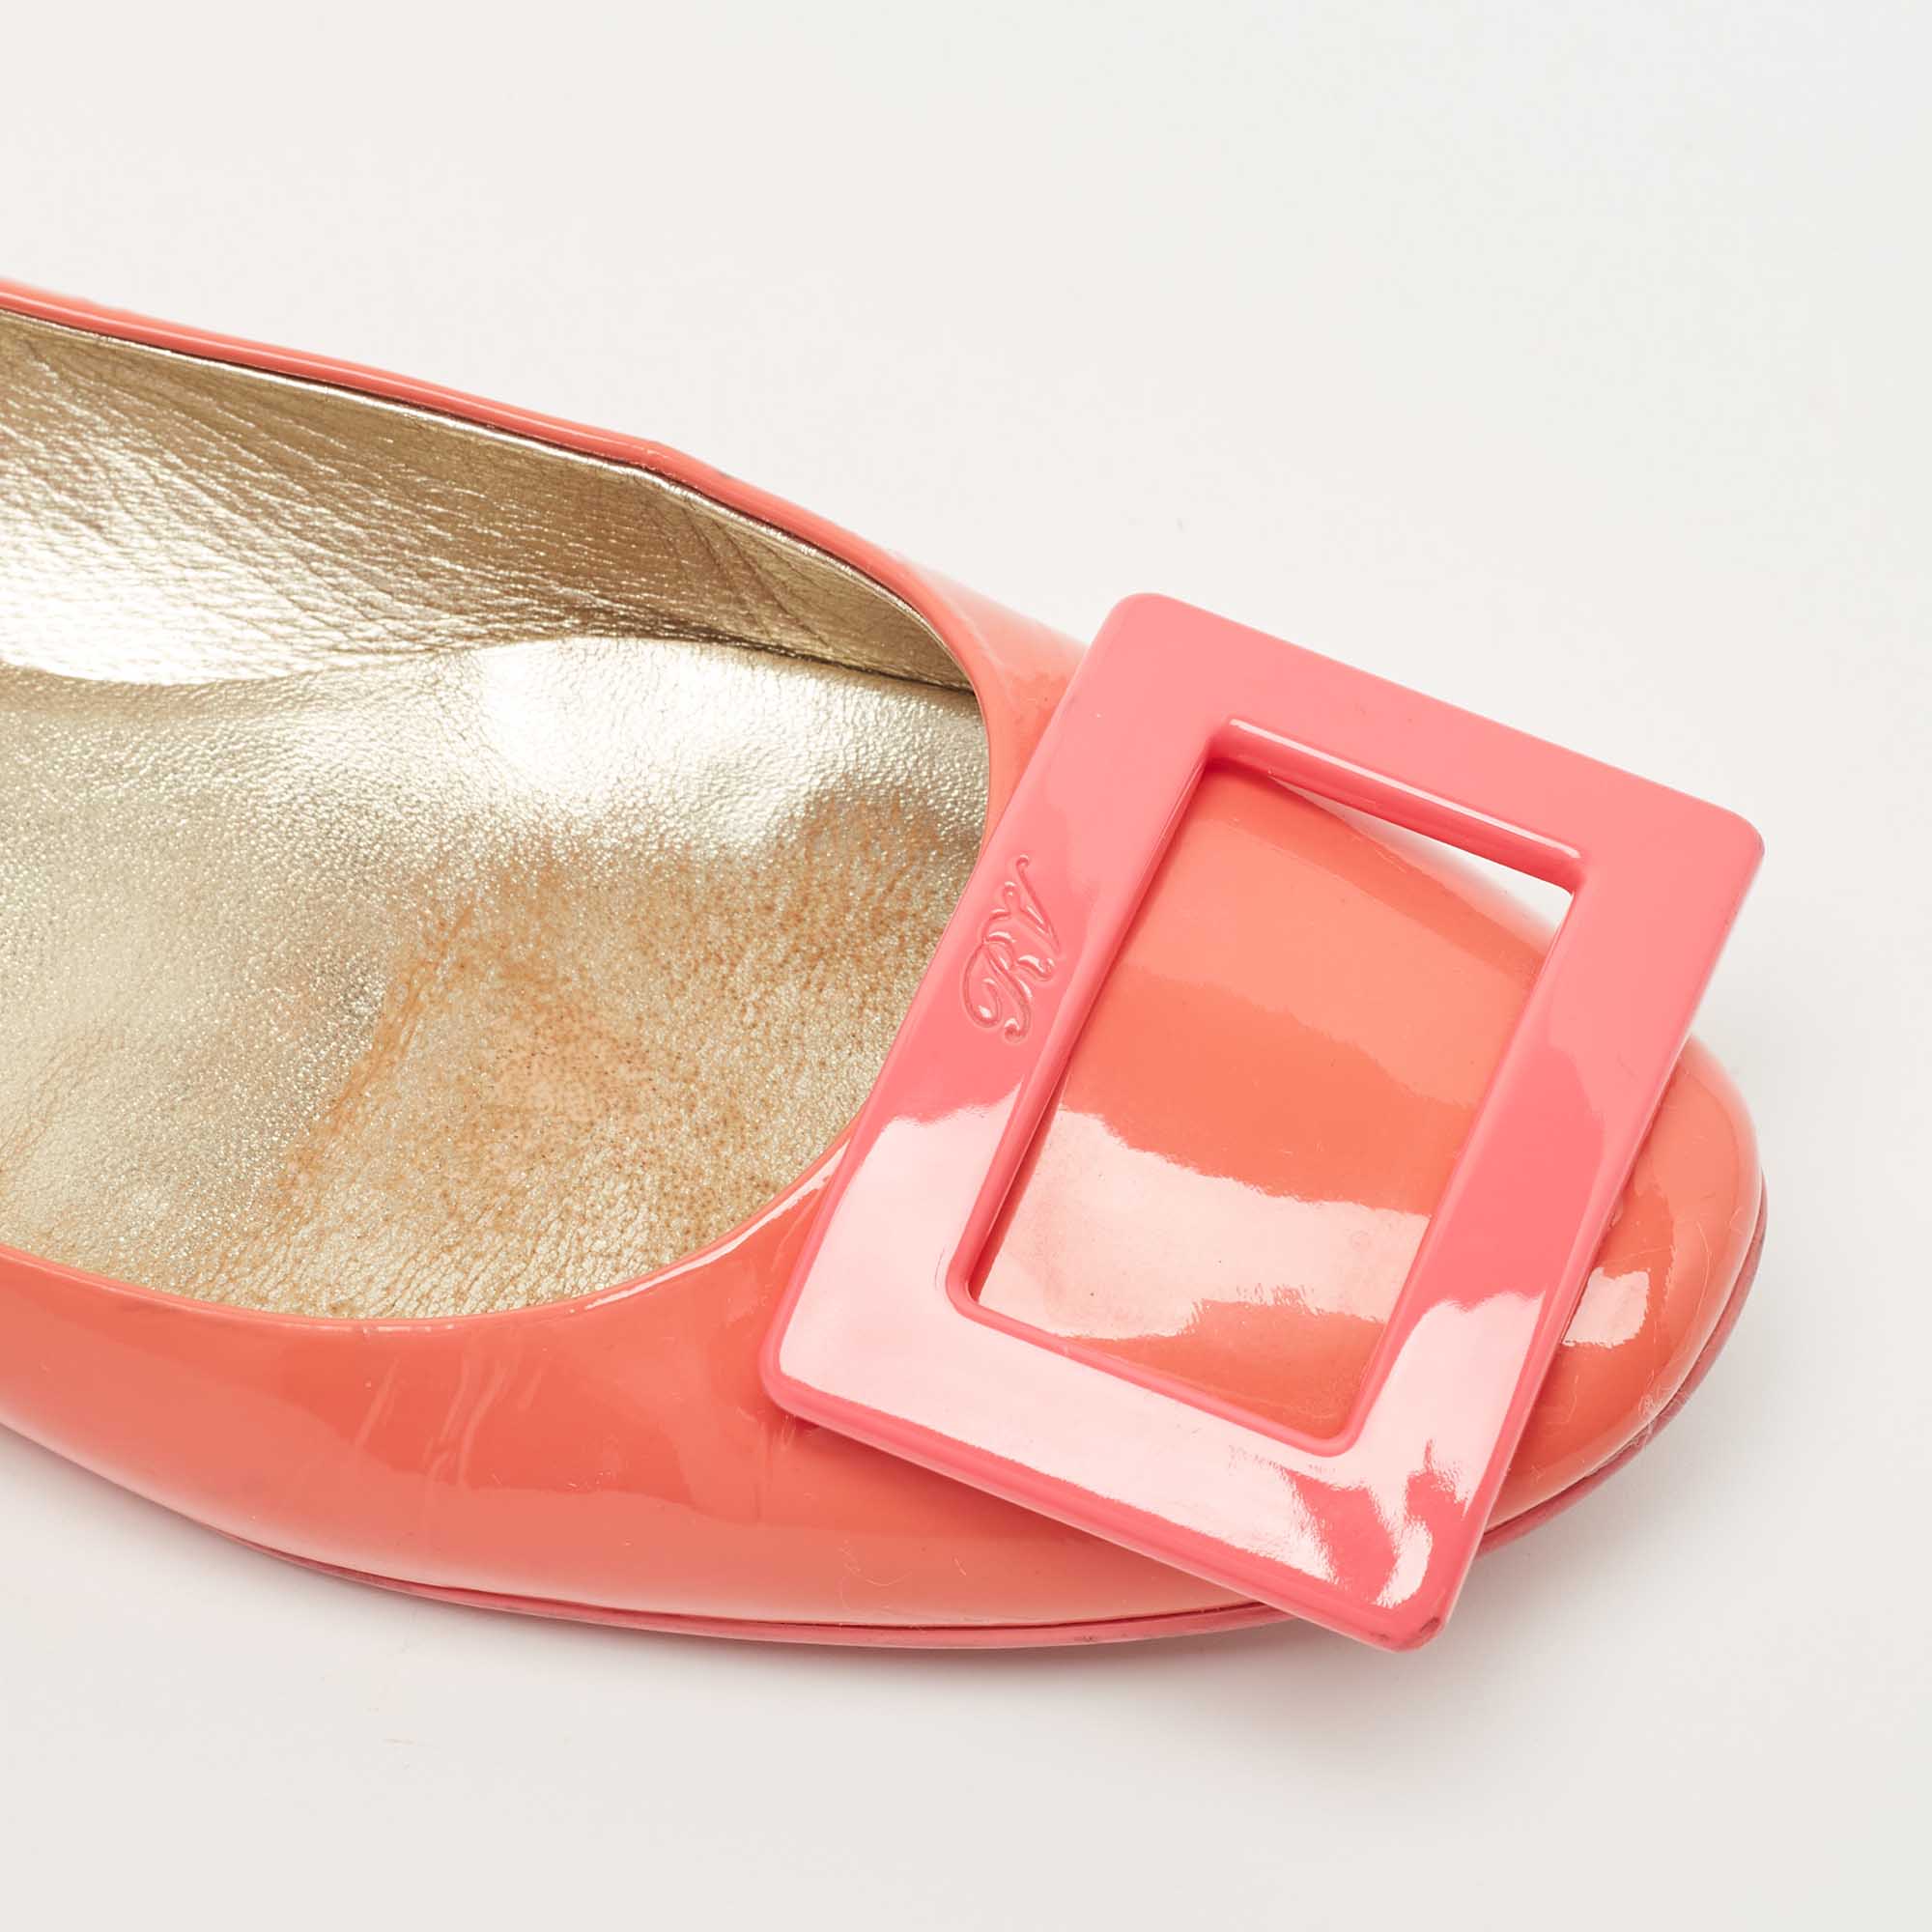 Roger Vivier Coral Pink Patent Leather Belle Vivier Ballet Flats Size 34.5